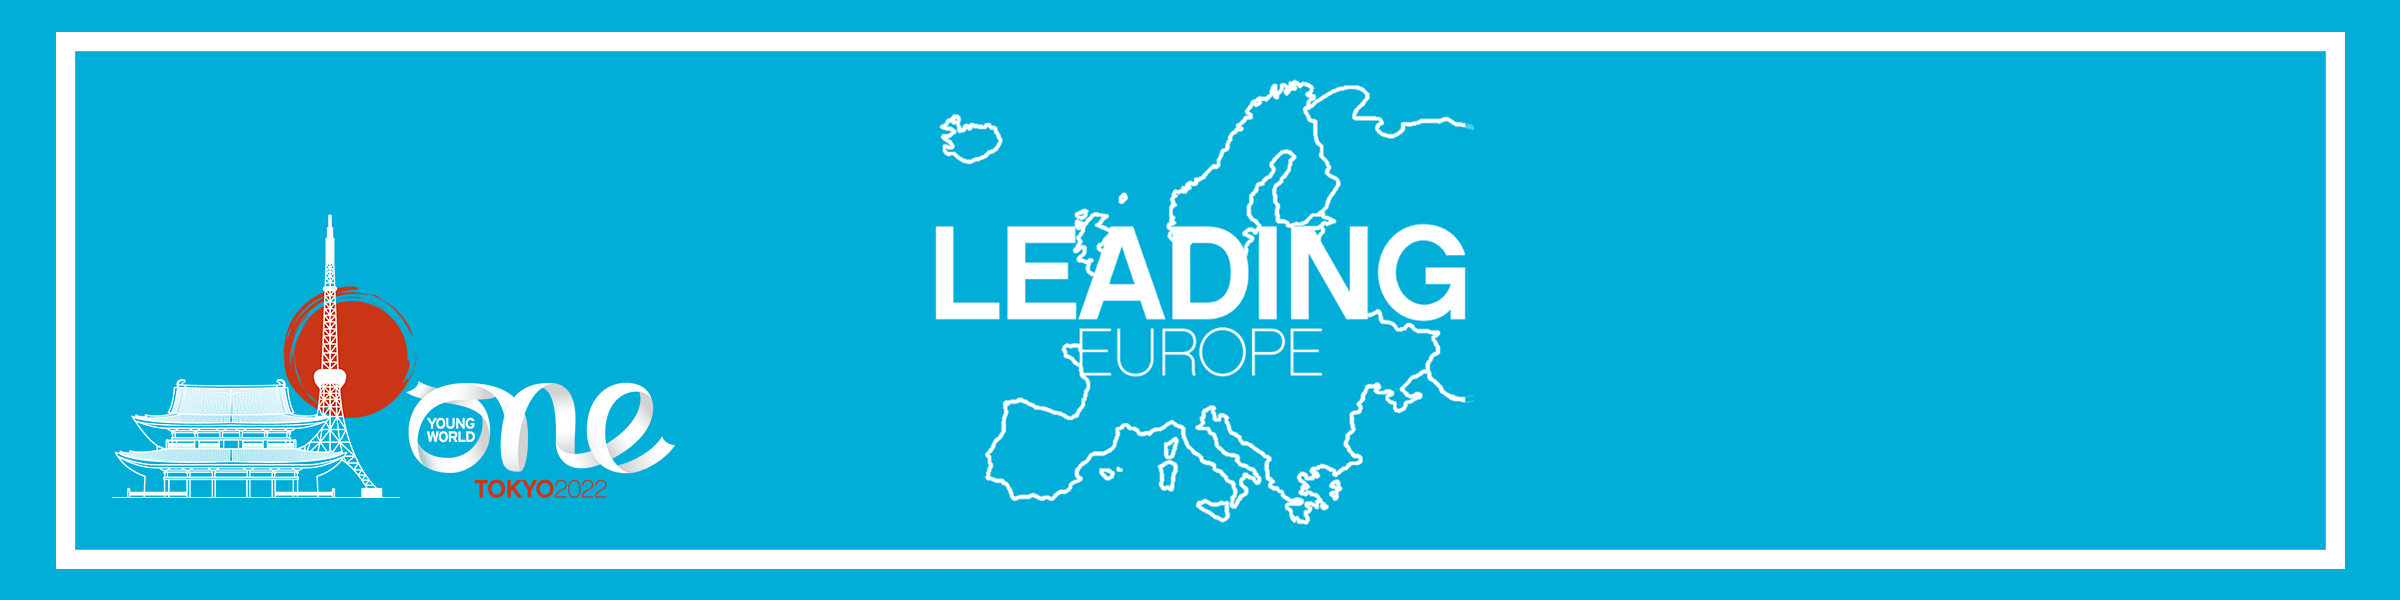 Leading Europe Scholarship Banner